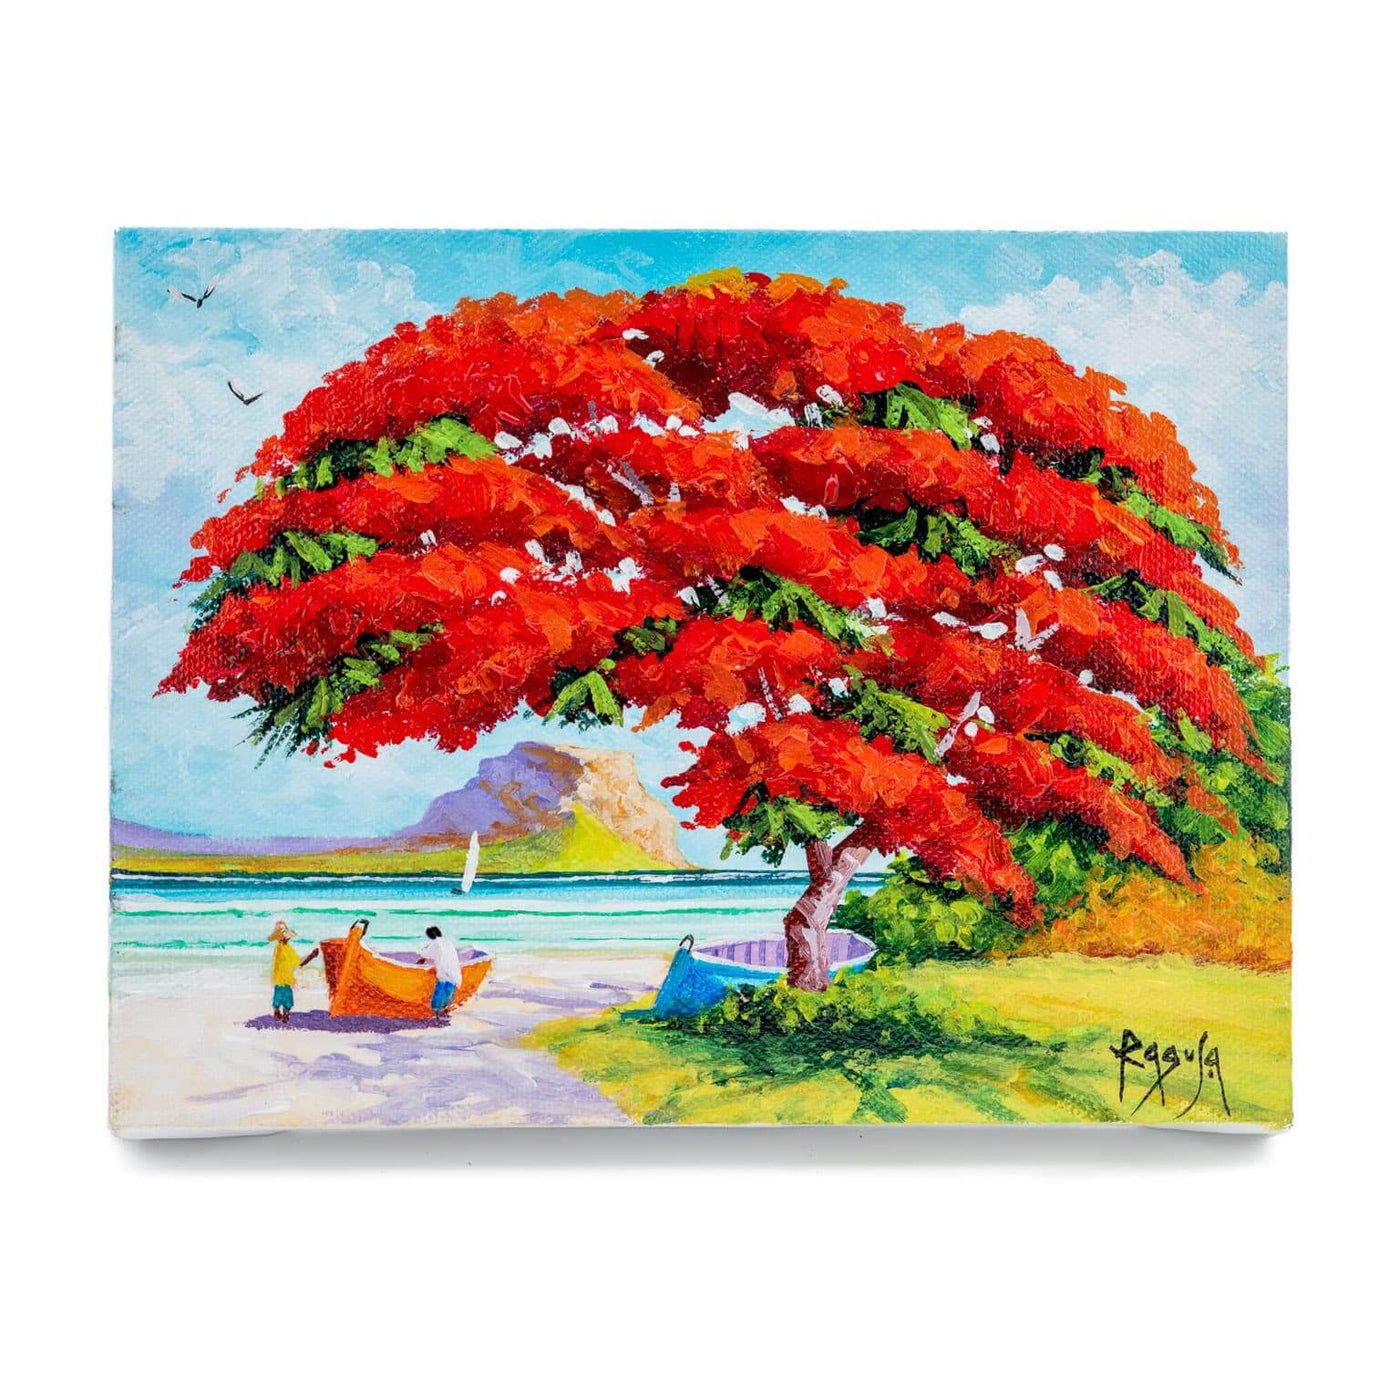 Mauritius-Authentic-HandMade-Painting-Pino Ragusa, "Flaboyant et Morne"-DodoMarket